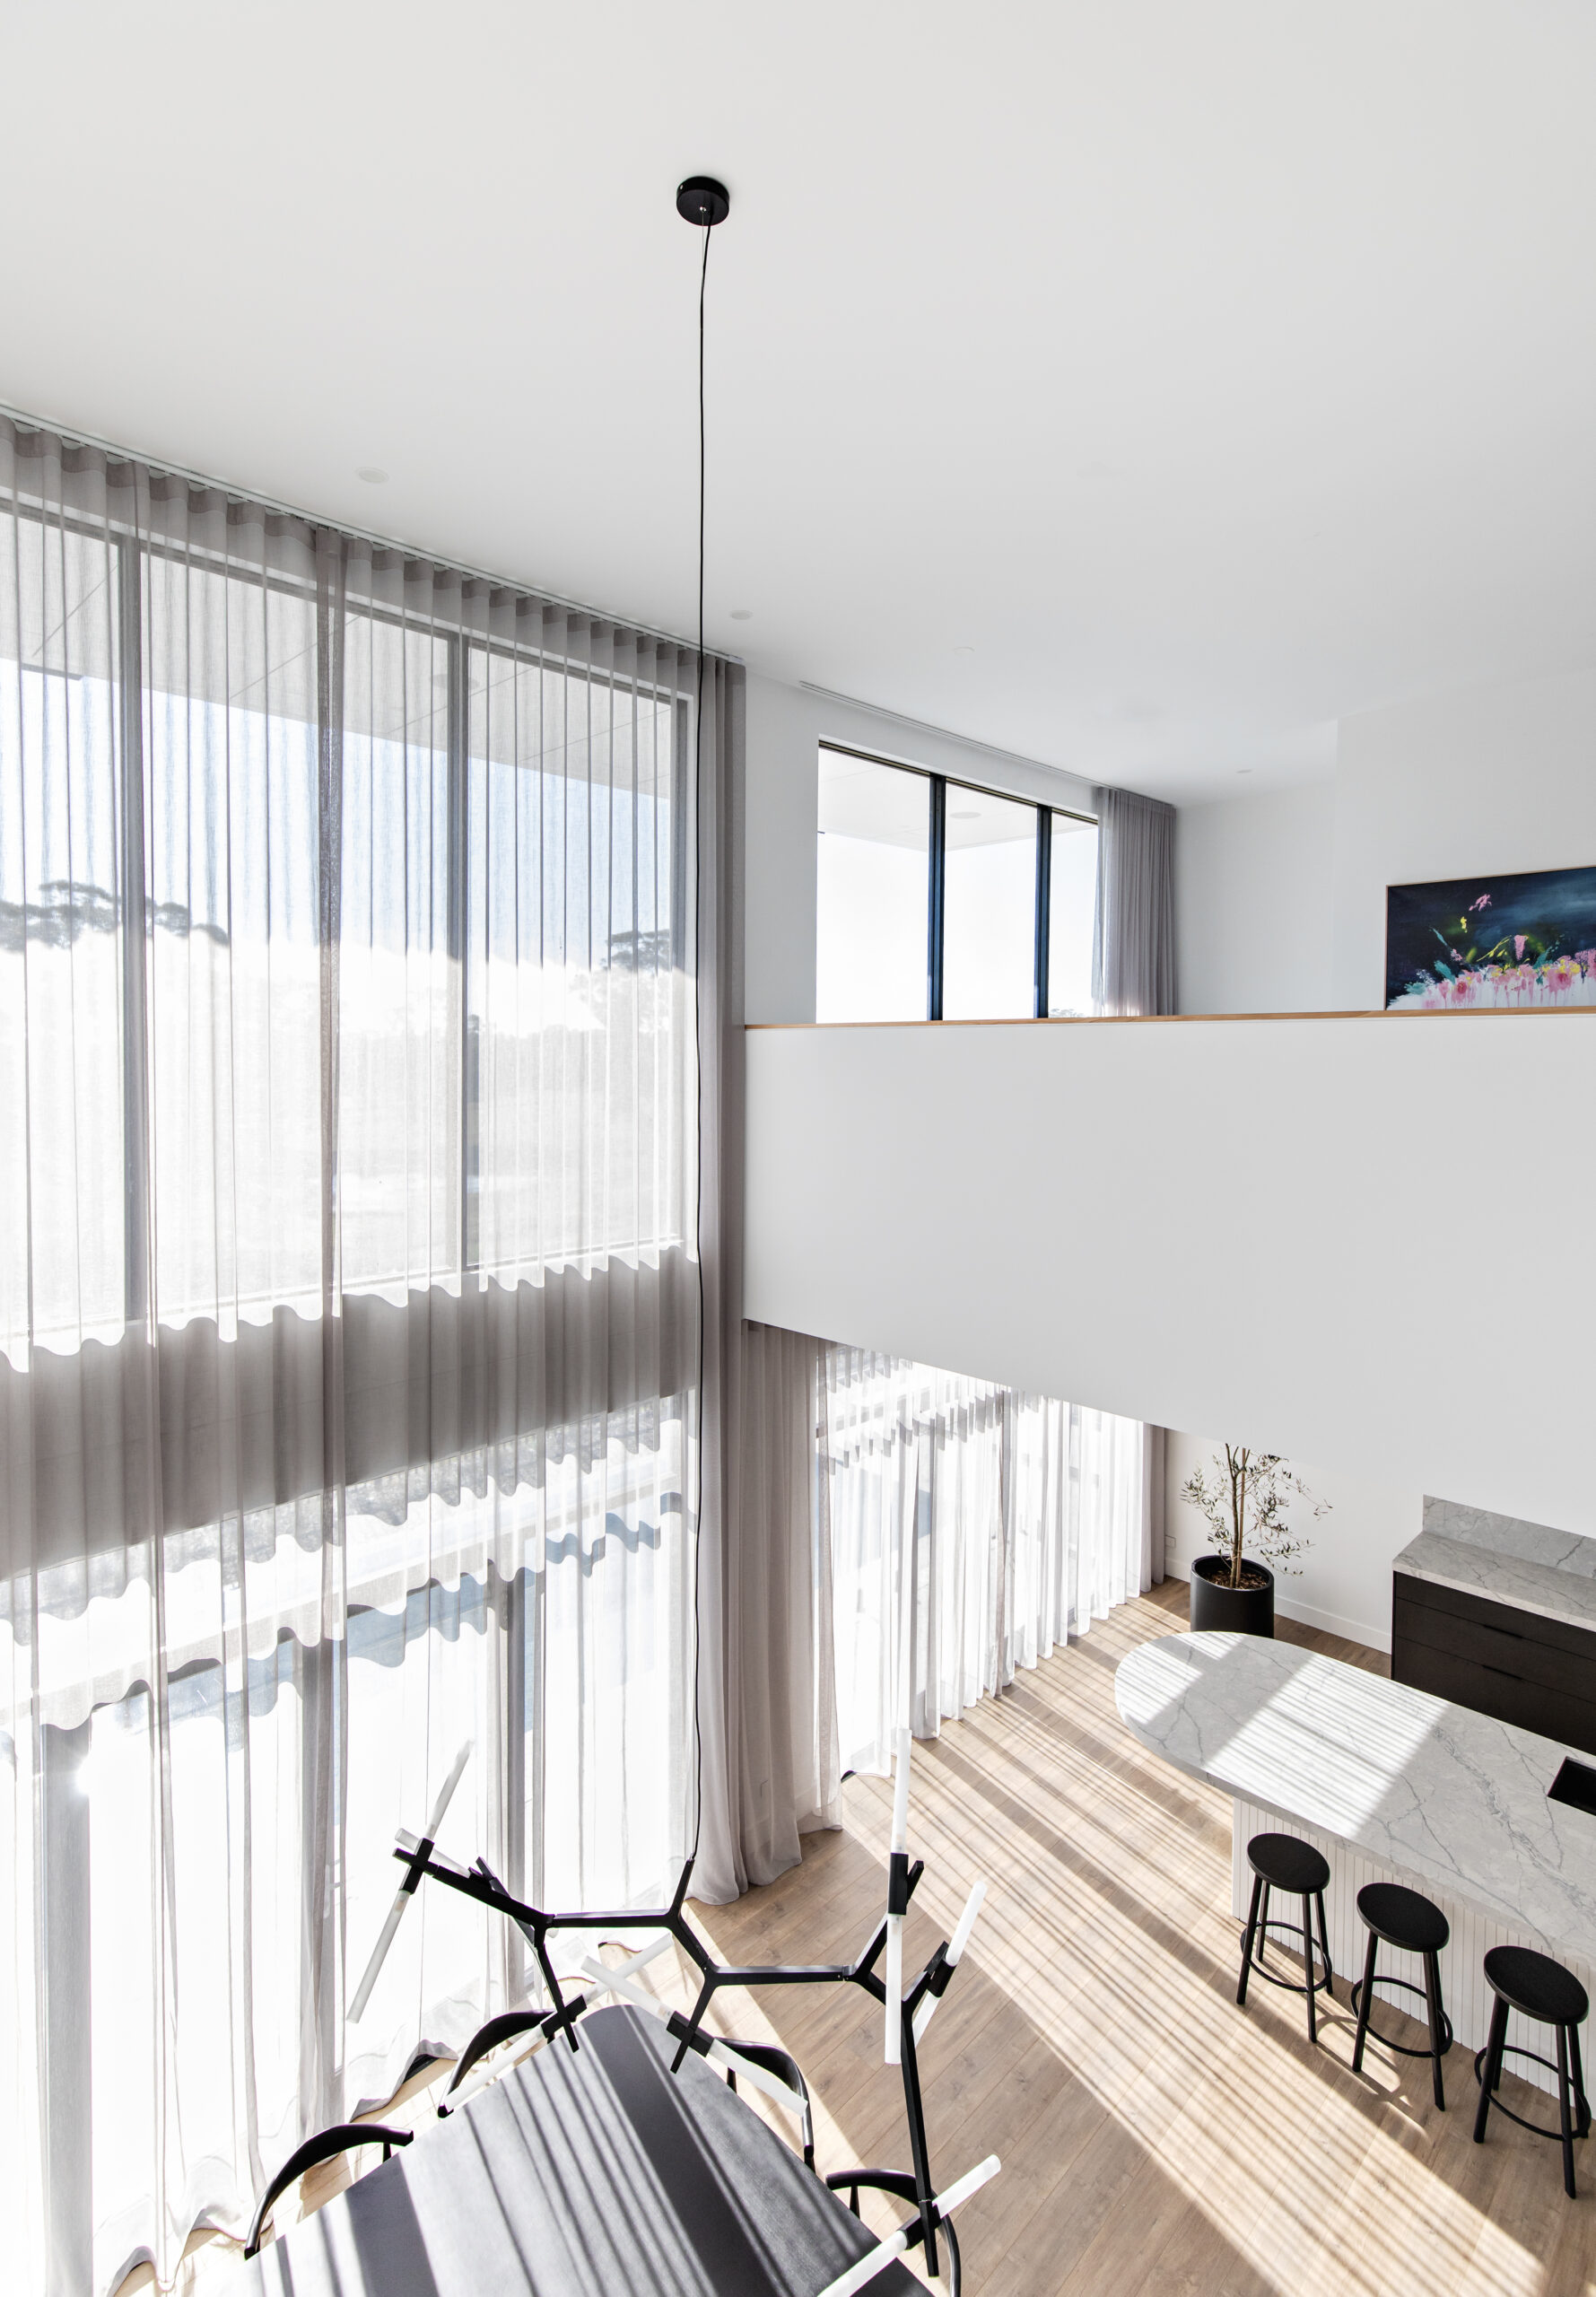 A residential interior featuring Hebel PowerFloor